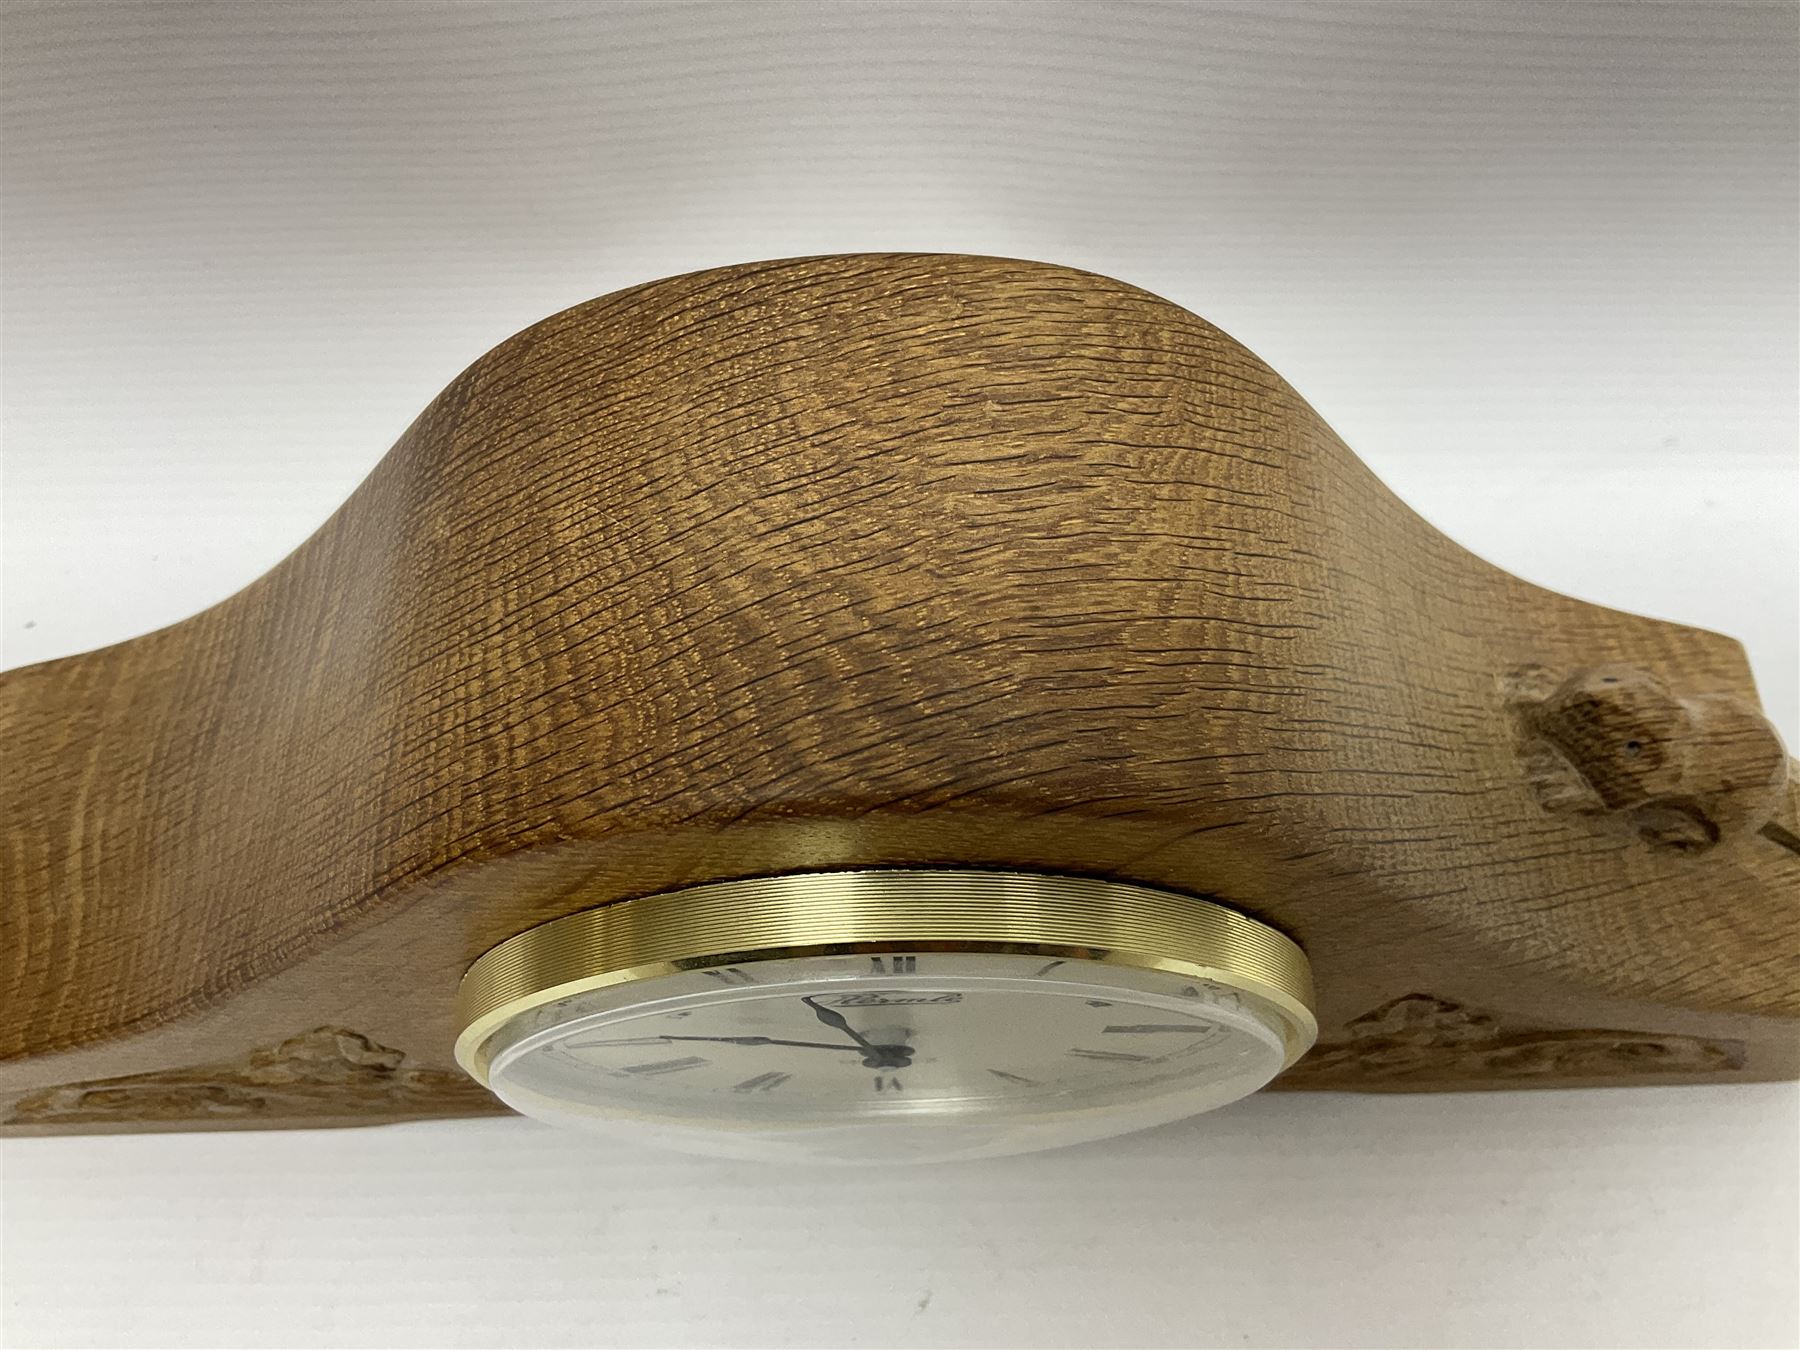 Beaverman - oak arched top mantel clock - Image 7 of 11